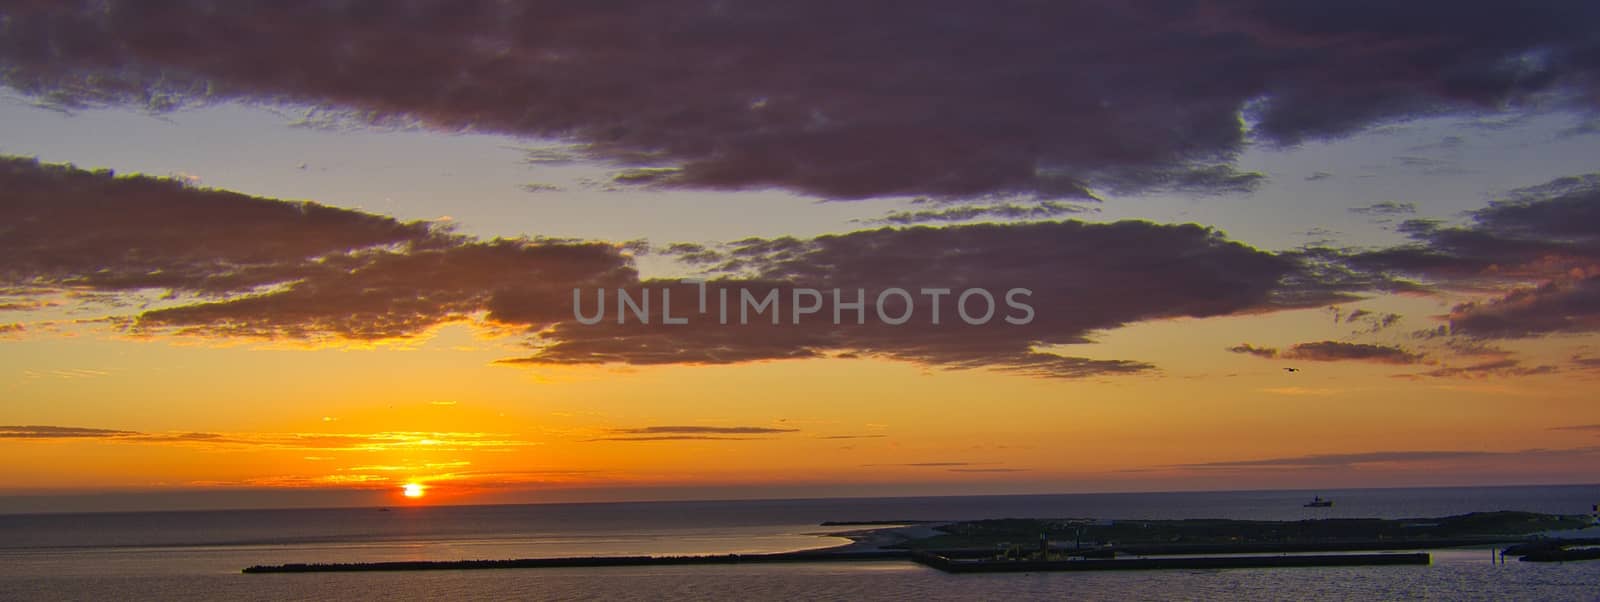 Heligoland - look on the island dune - sunrise over the sea